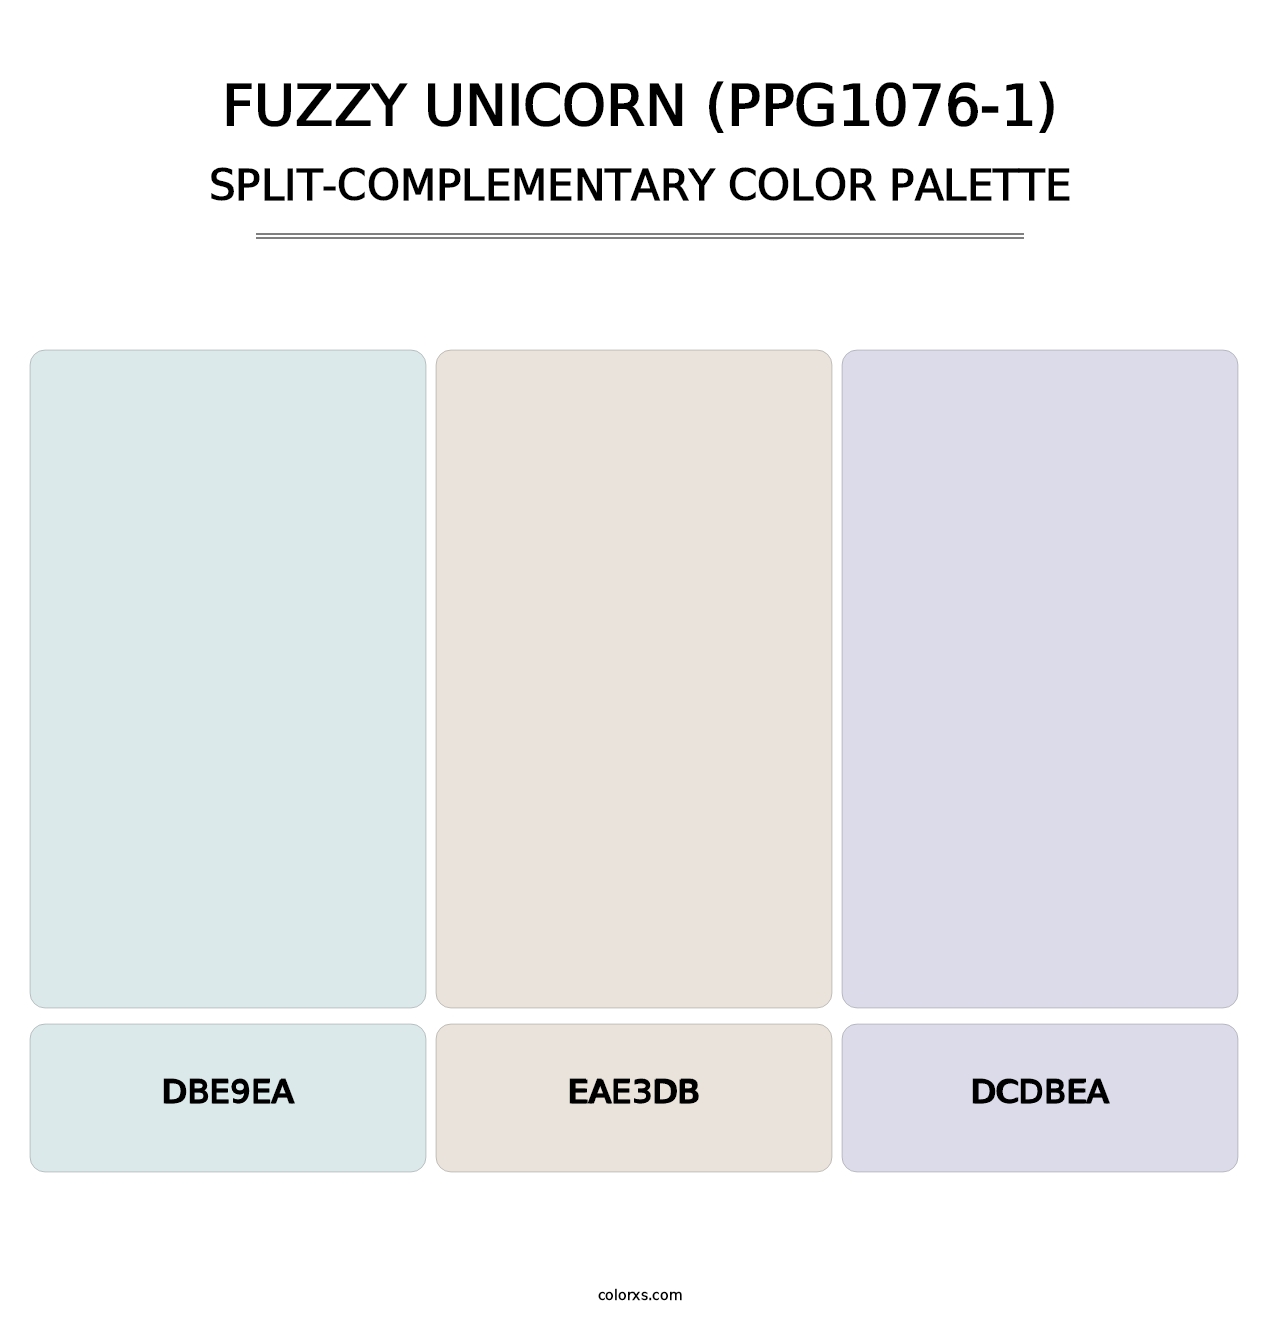 Fuzzy Unicorn (PPG1076-1) - Split-Complementary Color Palette